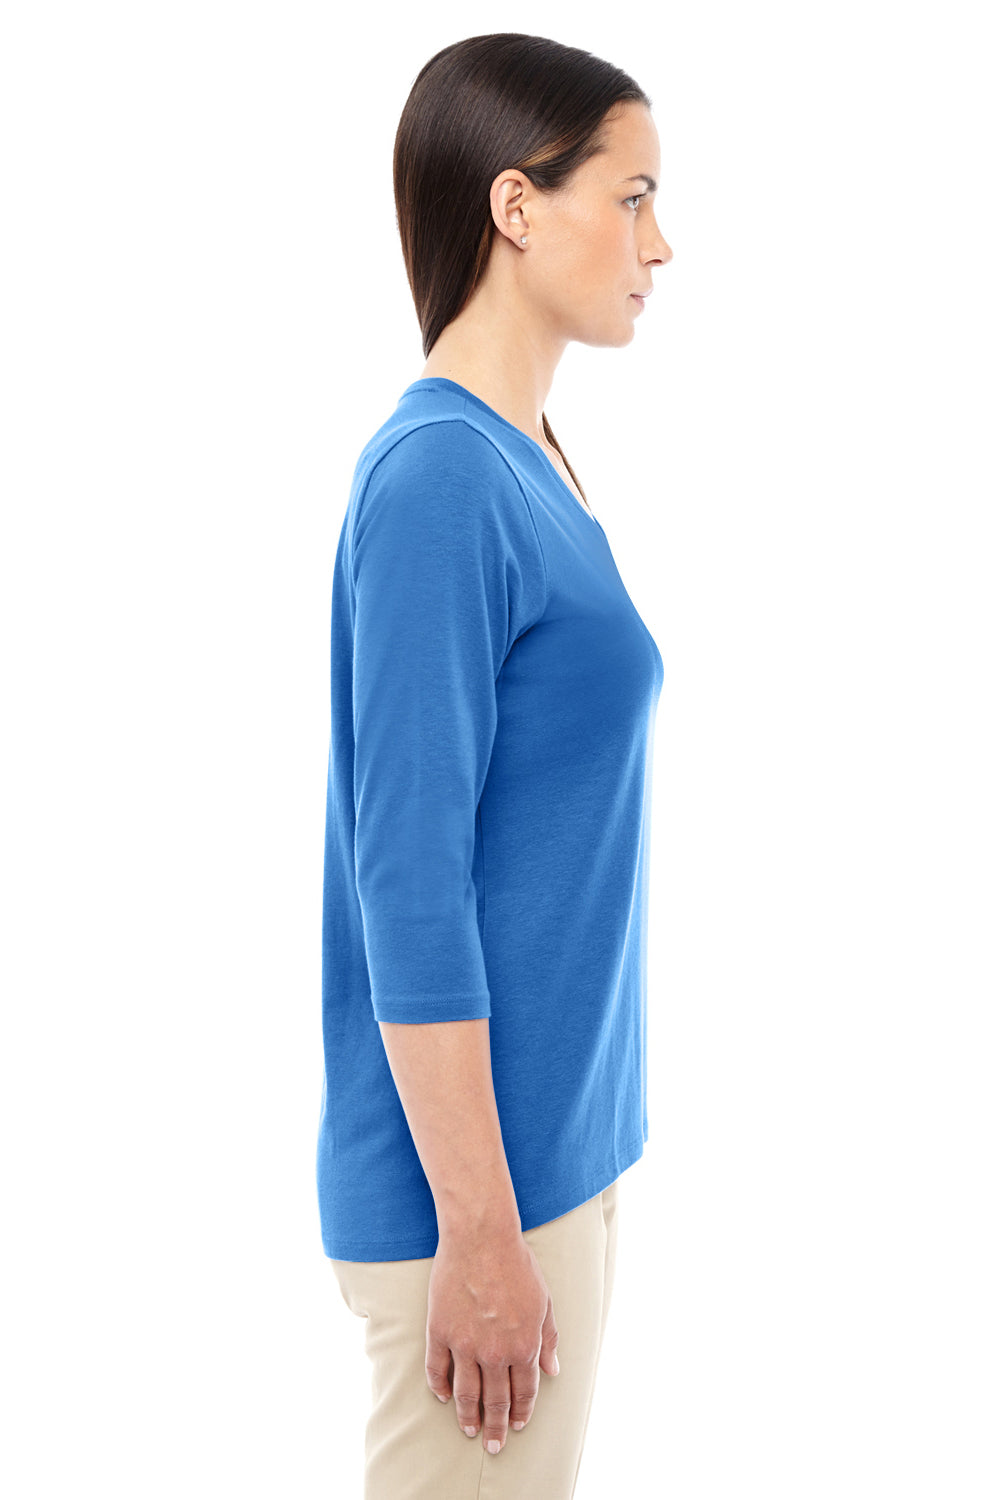 Devon & Jones DP184W Womens Perfect Fit 3/4 Sleeve V-Neck T-Shirt French Blue Side